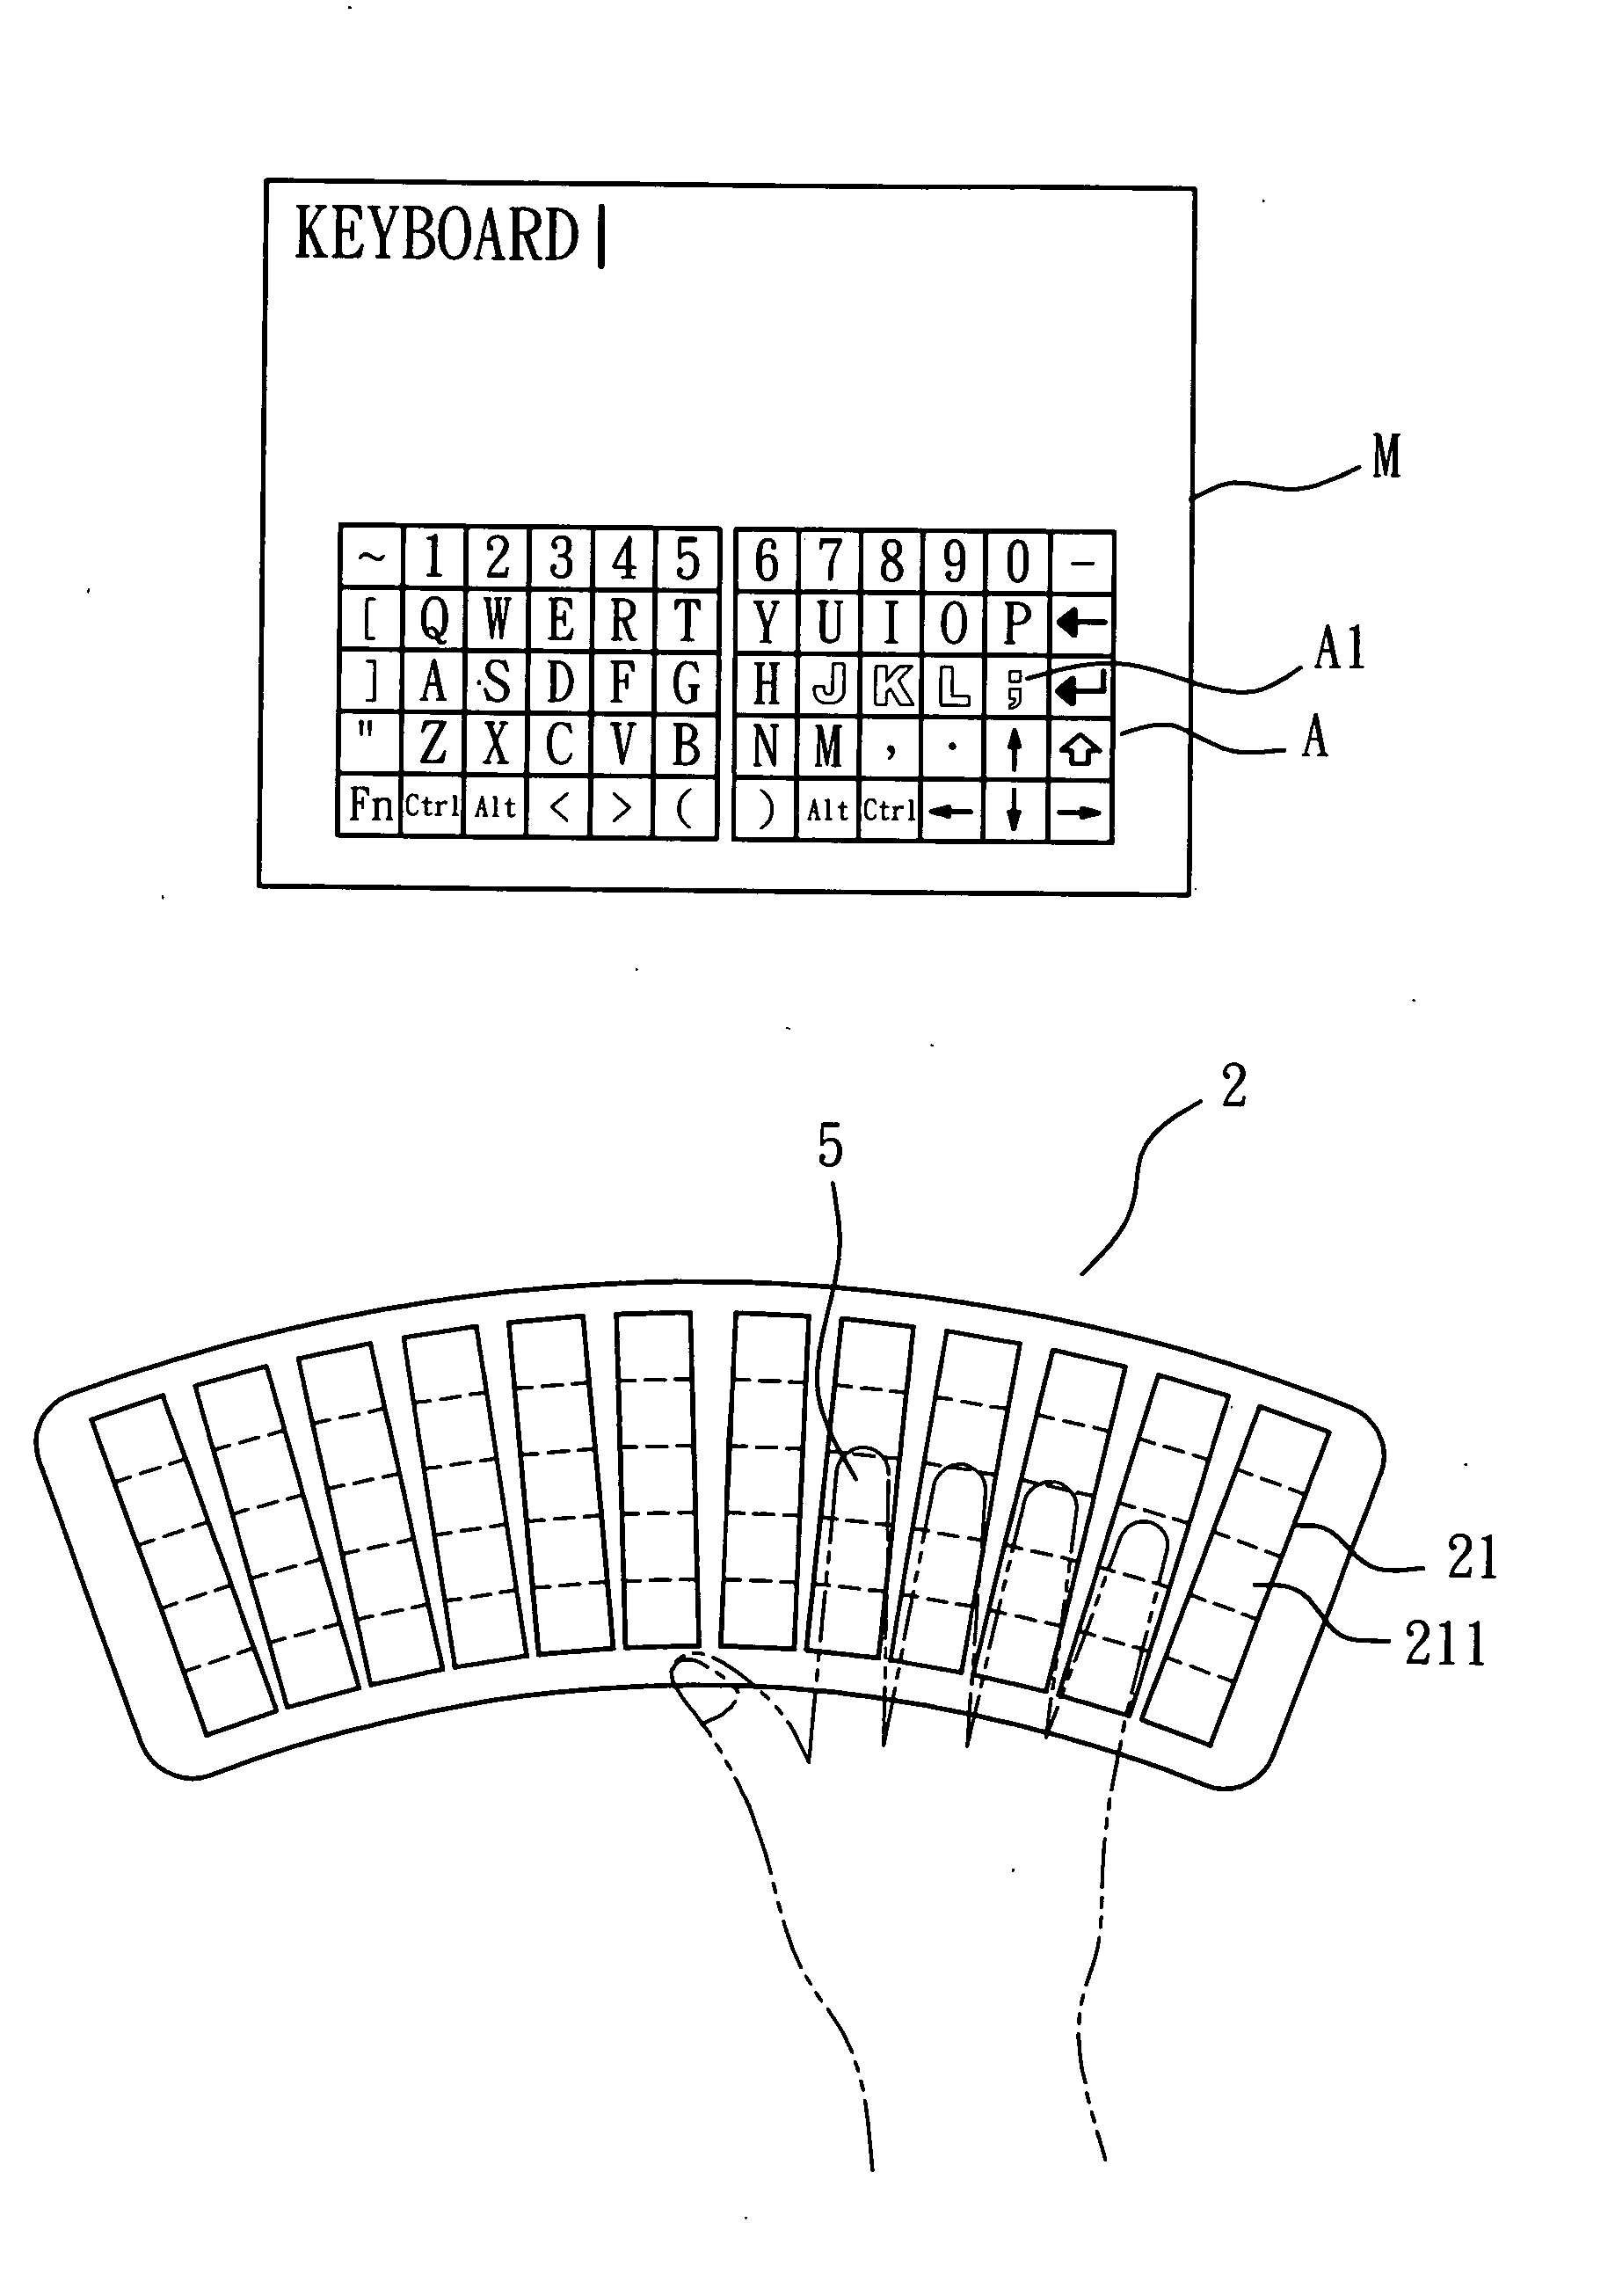 Miniaturized keyboard